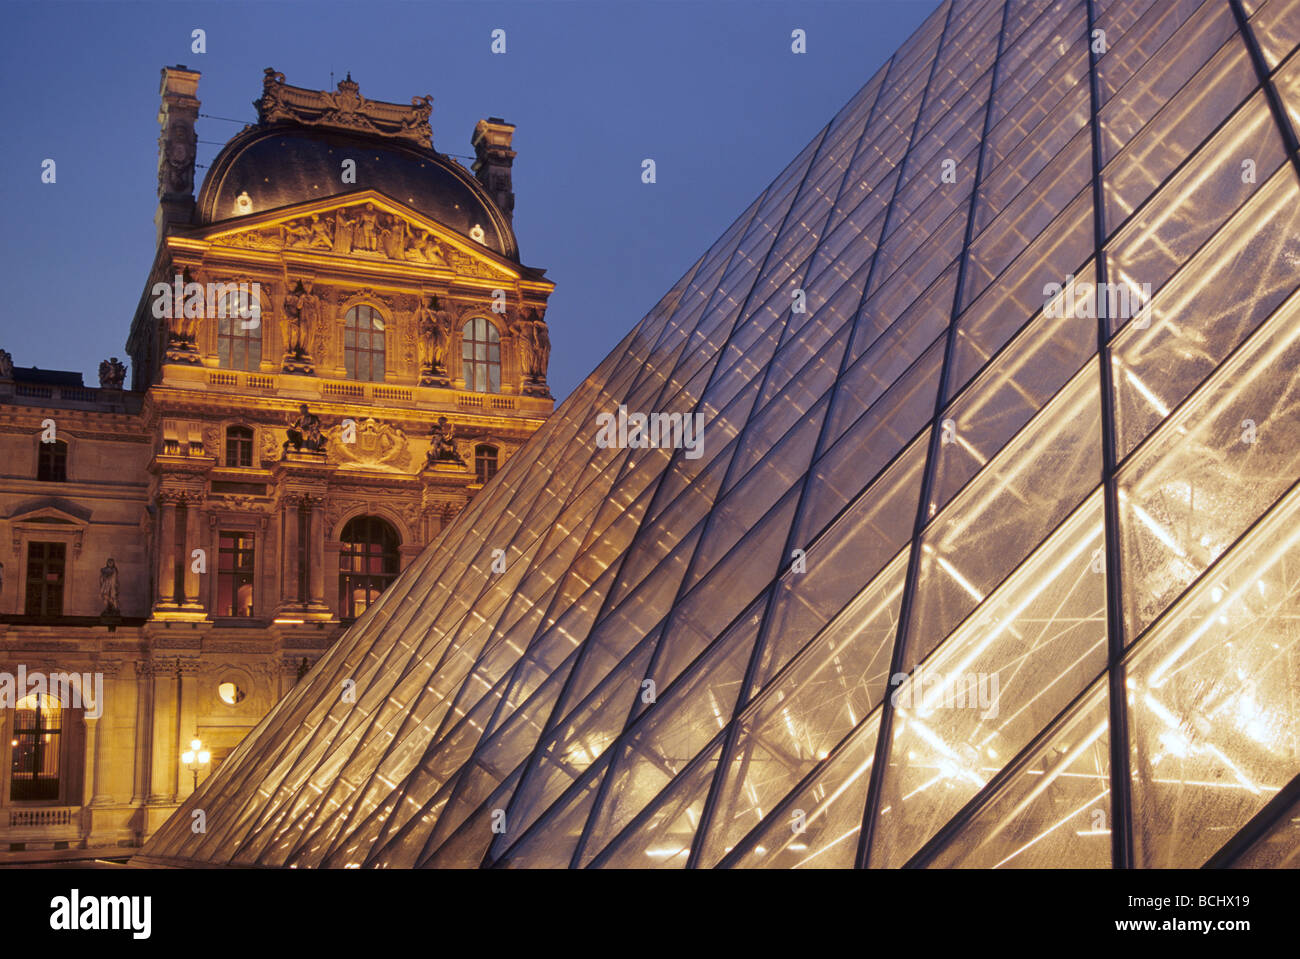 Illuminated Pyramid and Pavillon Denon at Musee du Louvre at night in Paris France Stock Photo